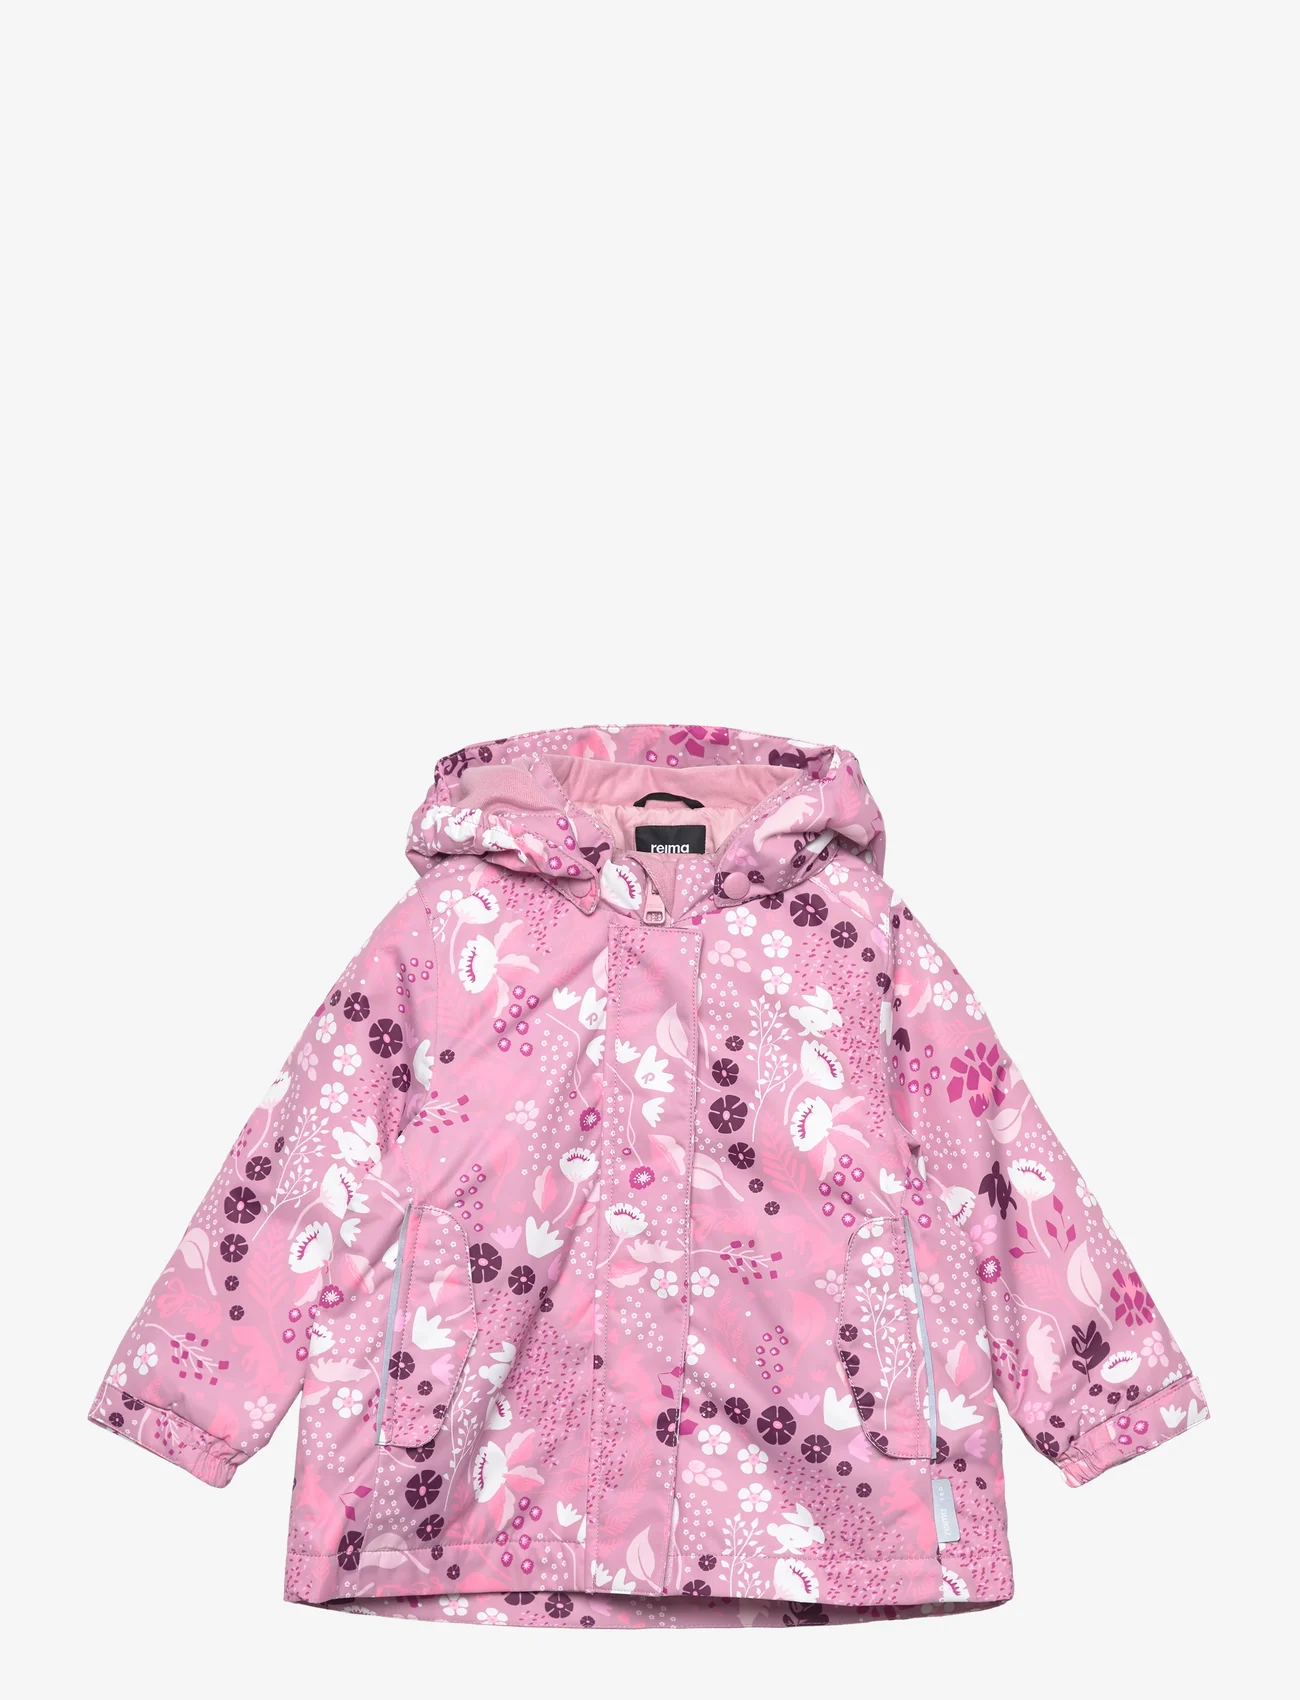 Reima - Toddlers' winter jacket Kuhmoinen - skalljakke - grey pink - 0